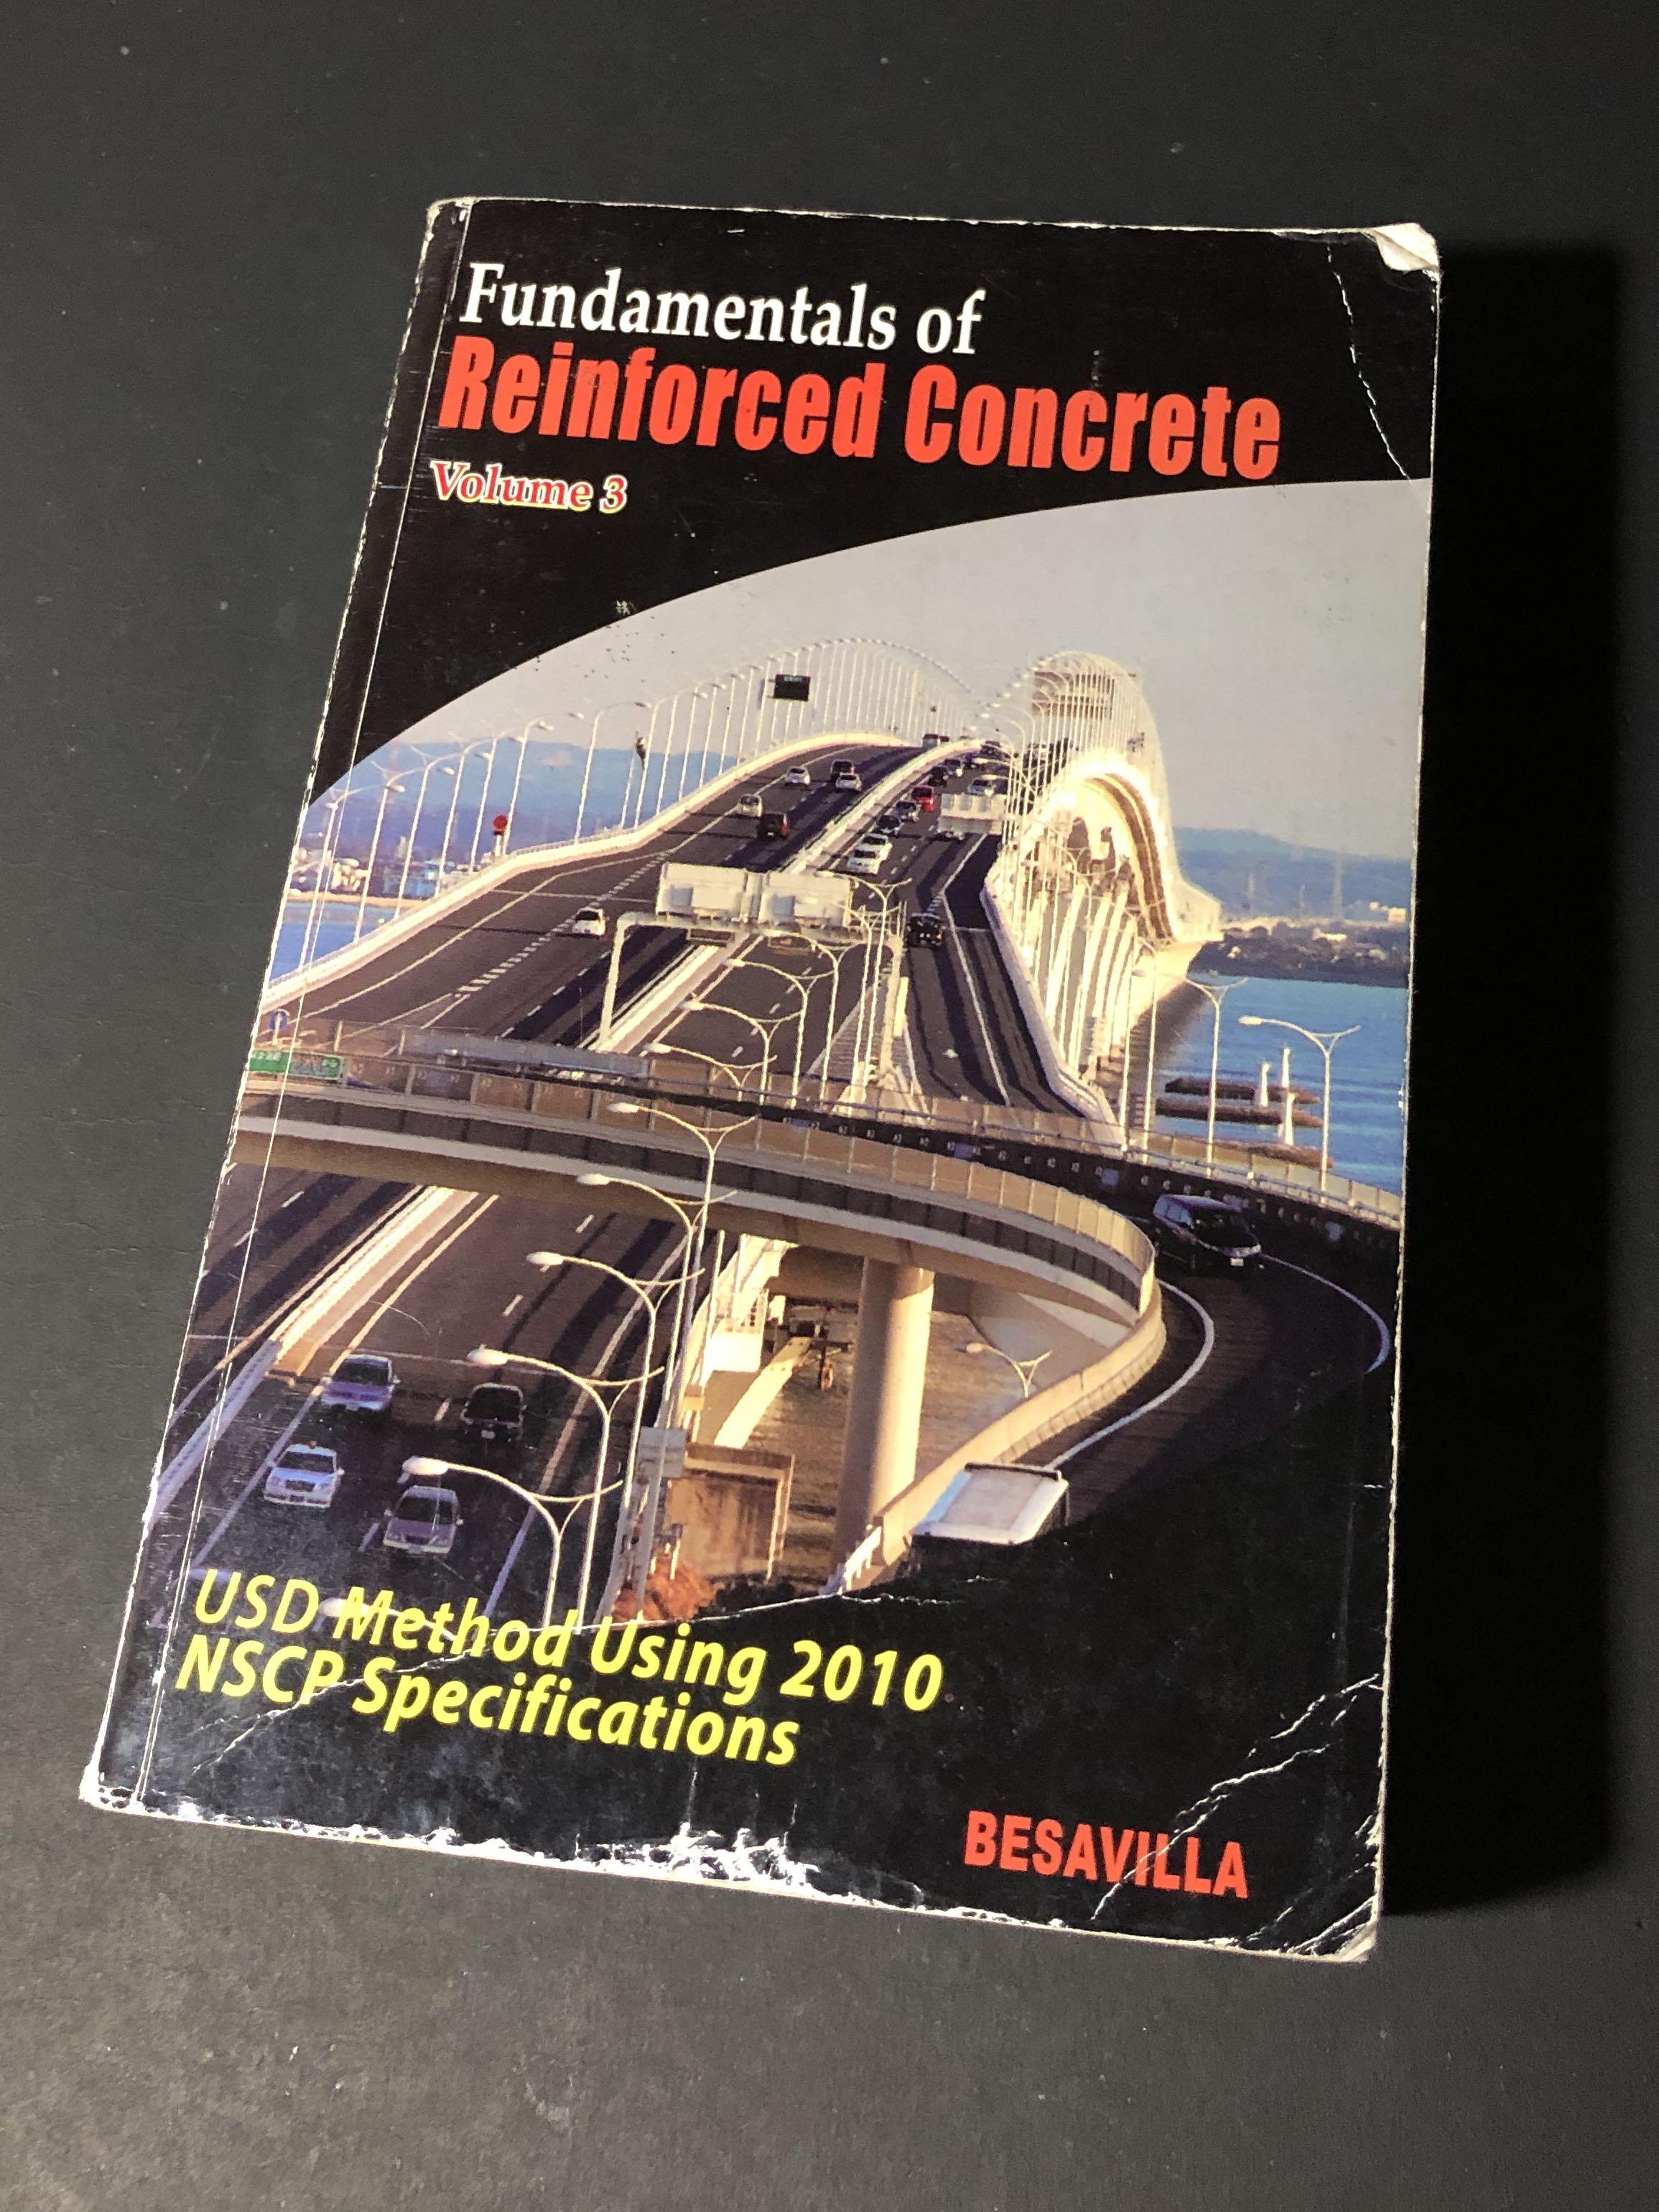 Fundamentals of Reinforced Concrete Vol. 3 (Besavilla), Hobbies & Toys